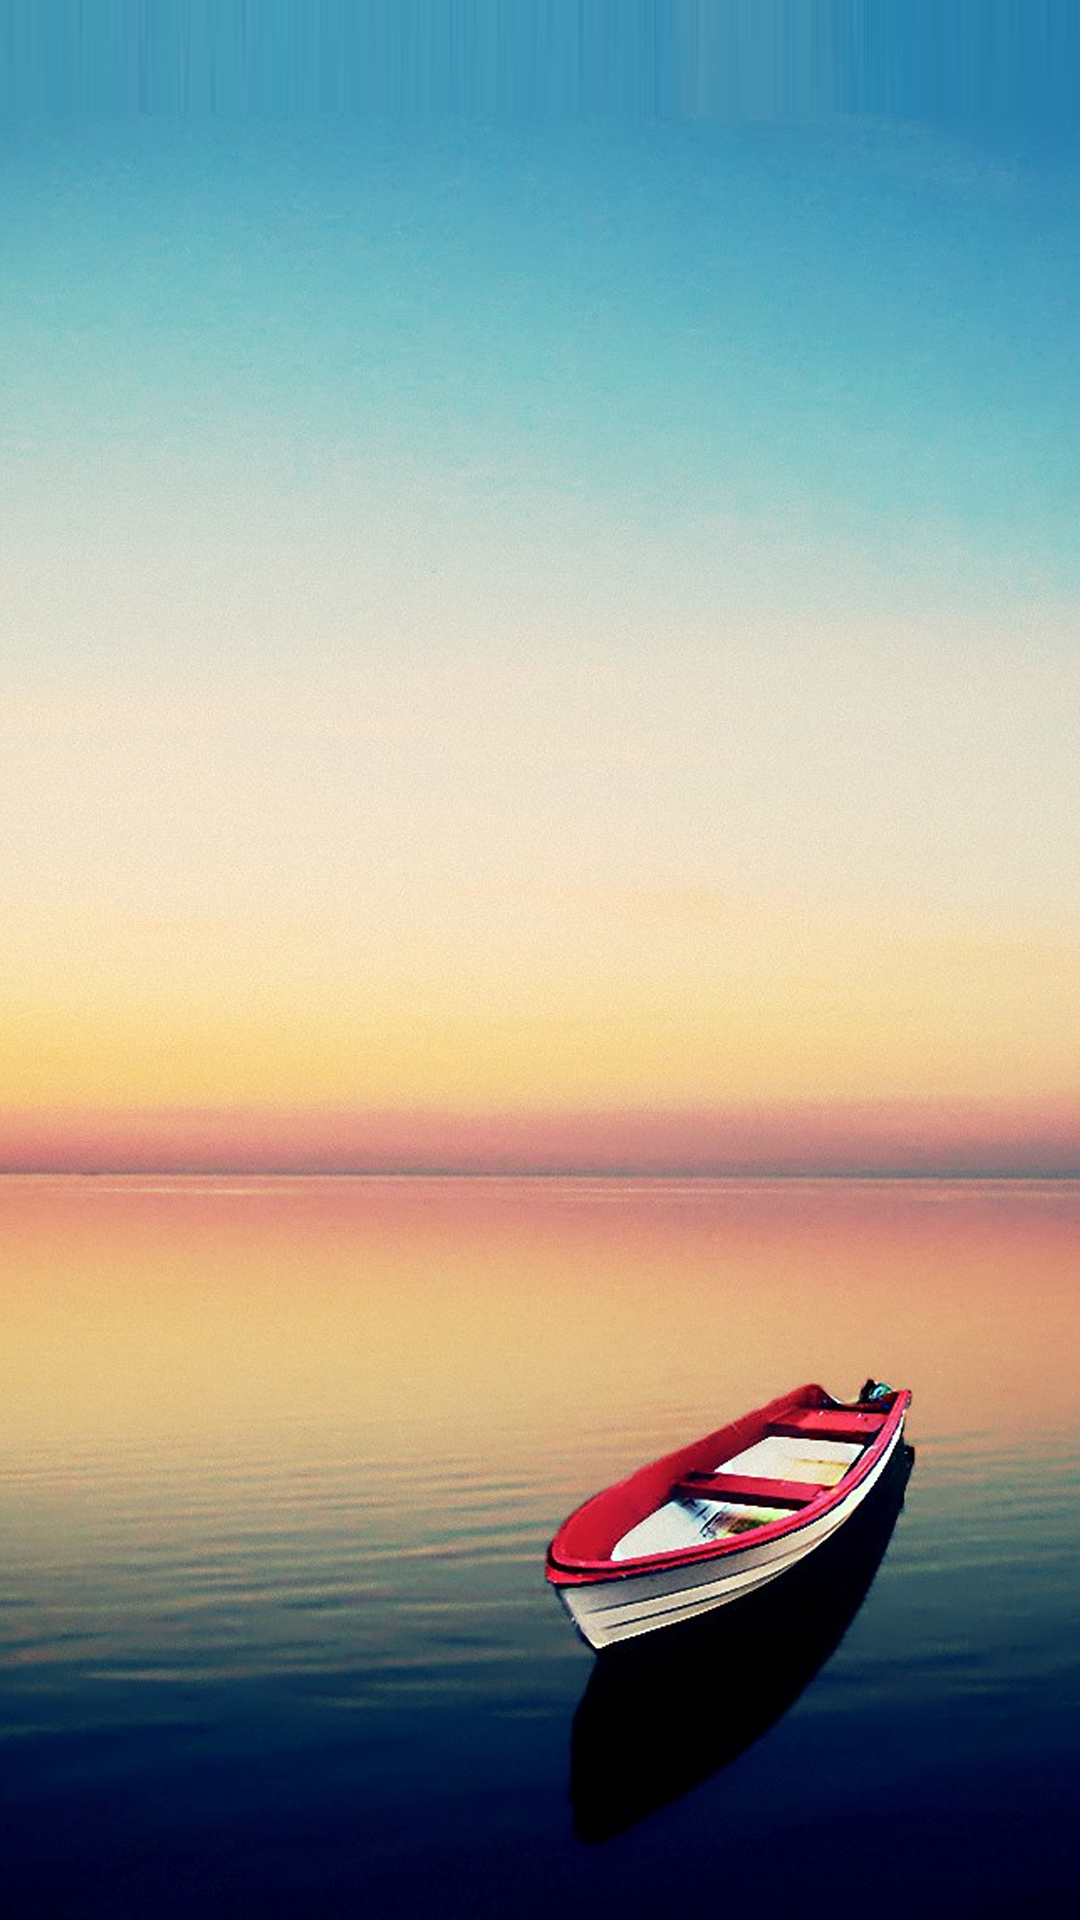 Boat At Sunset Smartphone HD Wallpaper Getphotos